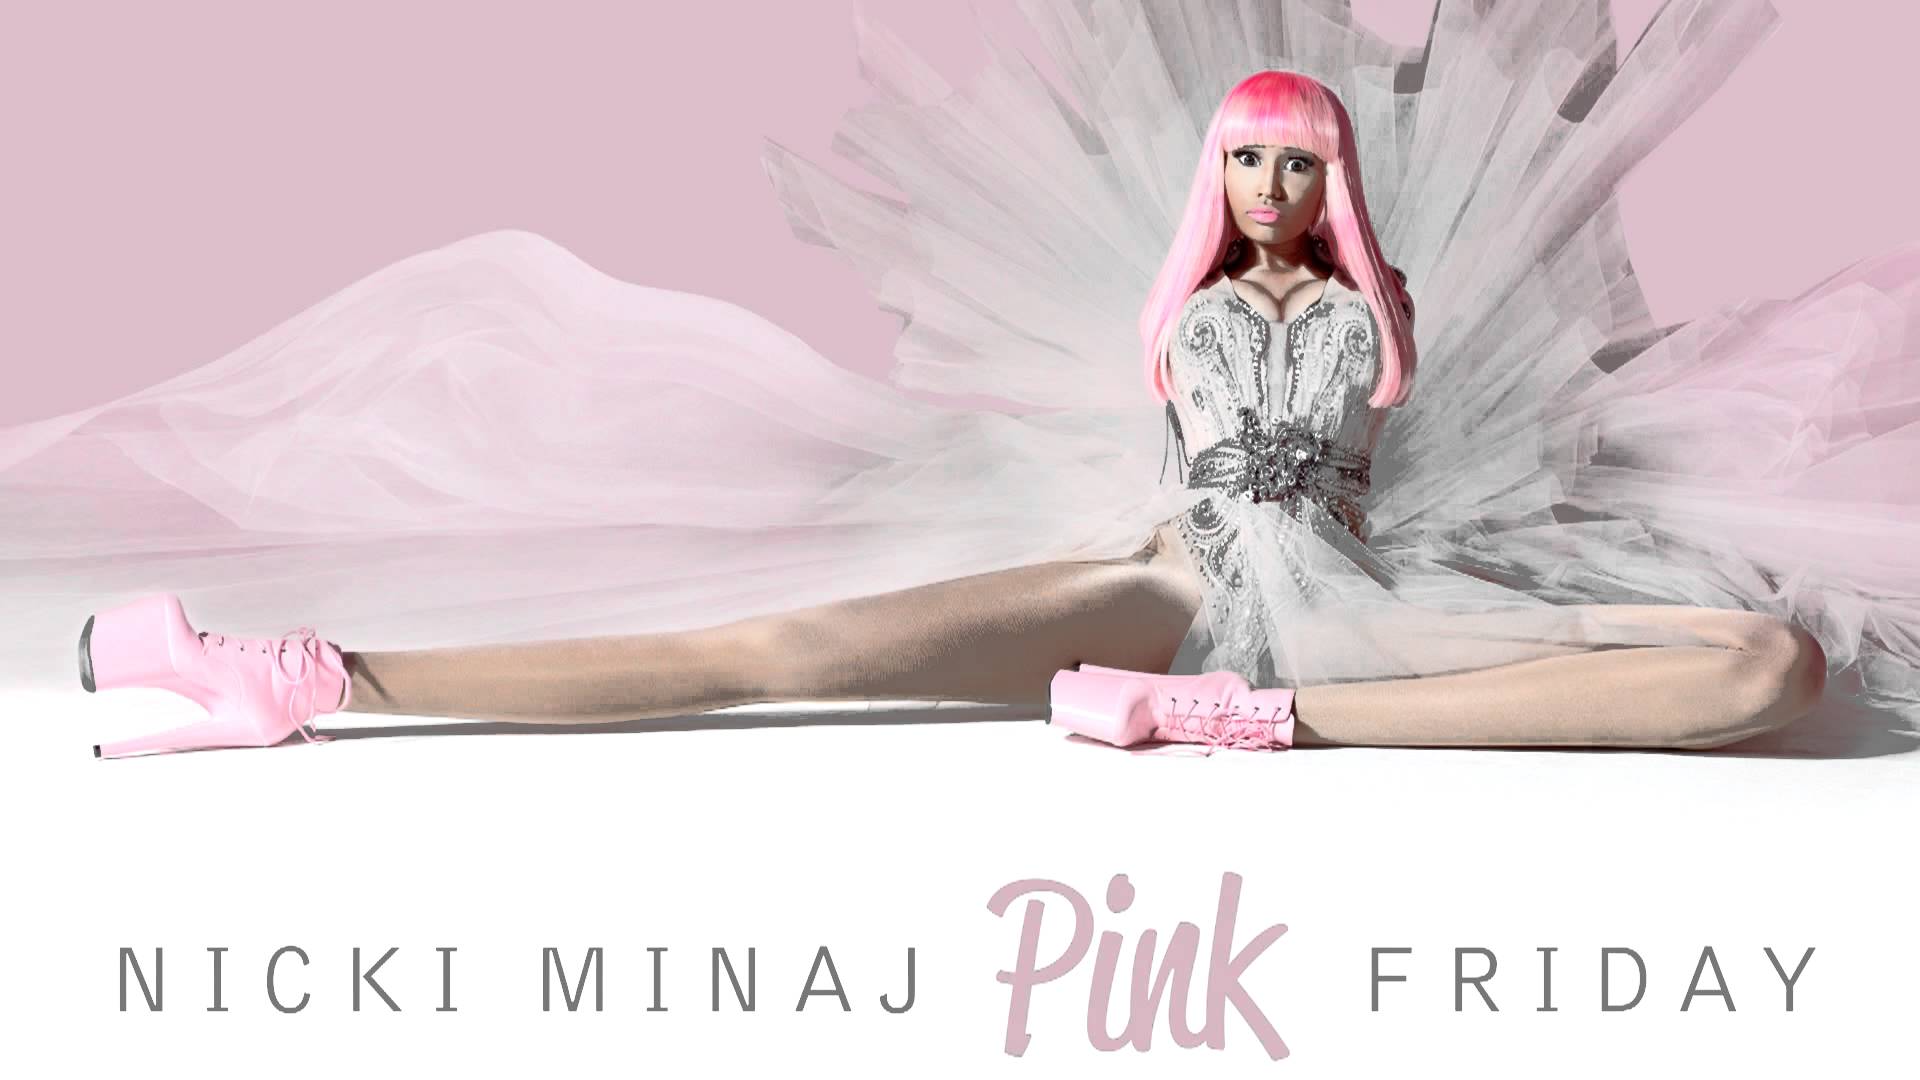 5. "Nicki Minaj Pink Friday Nail Polish Collection" - wide 1